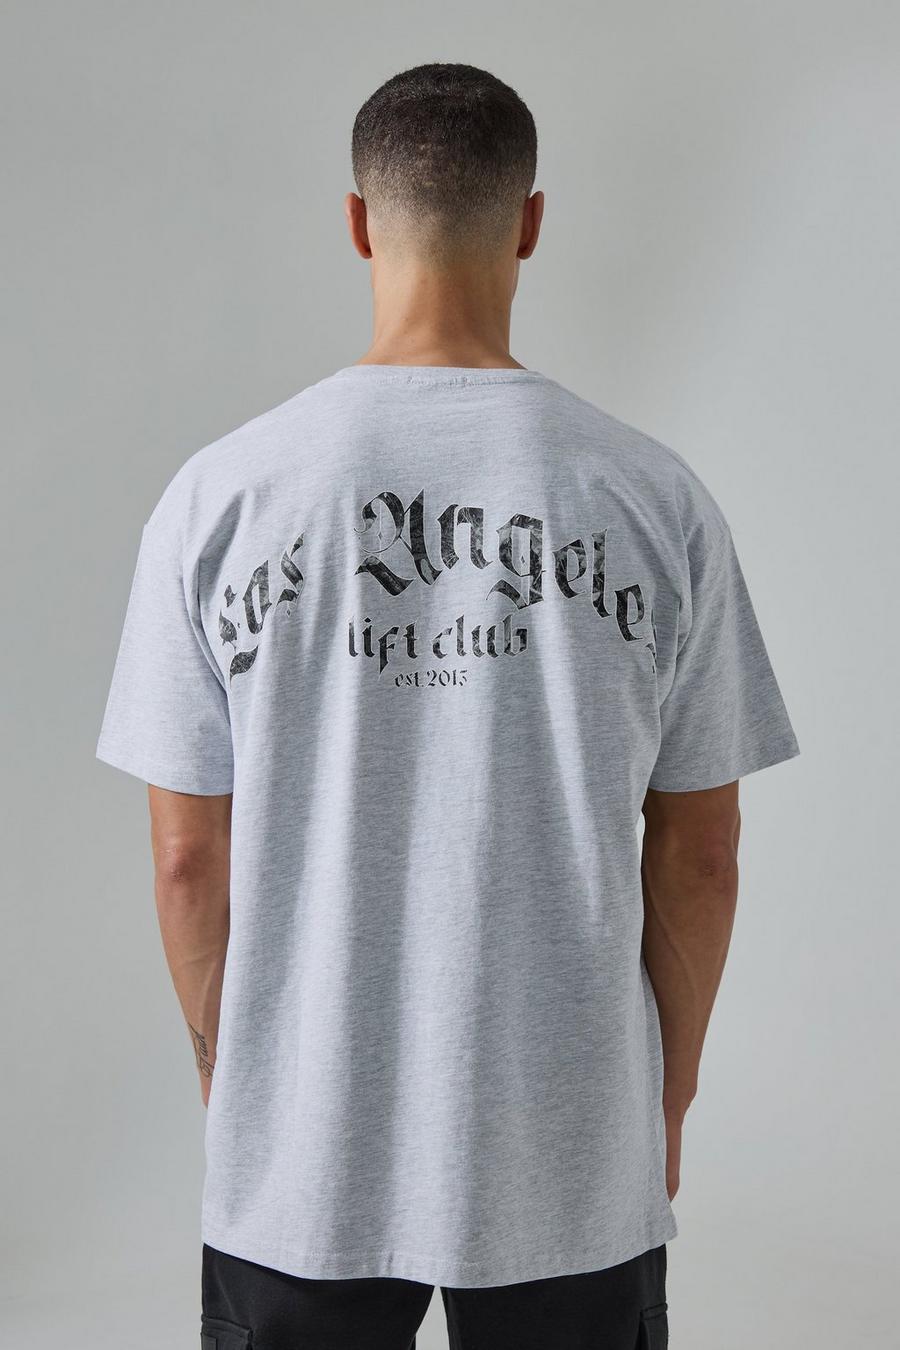 T-shirt oversize Man Active La Lift Club, Grey marl image number 1